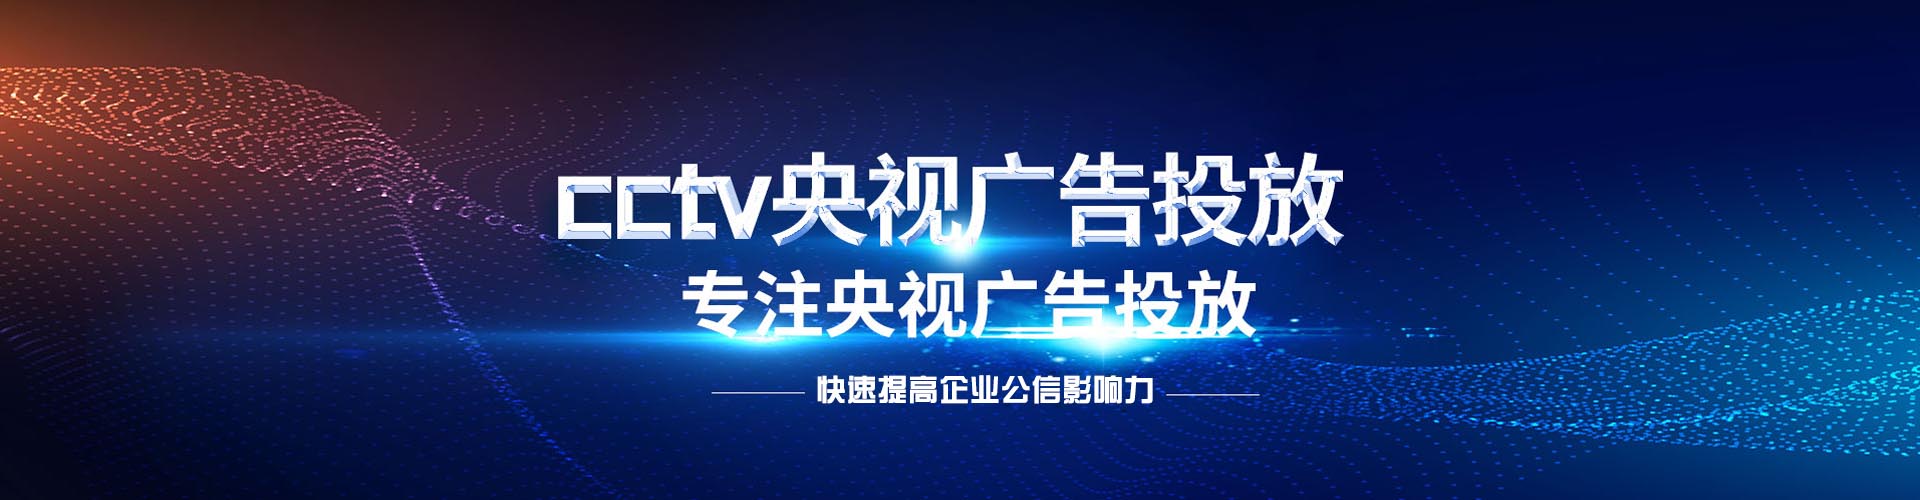 CCTV央视广告代理投放